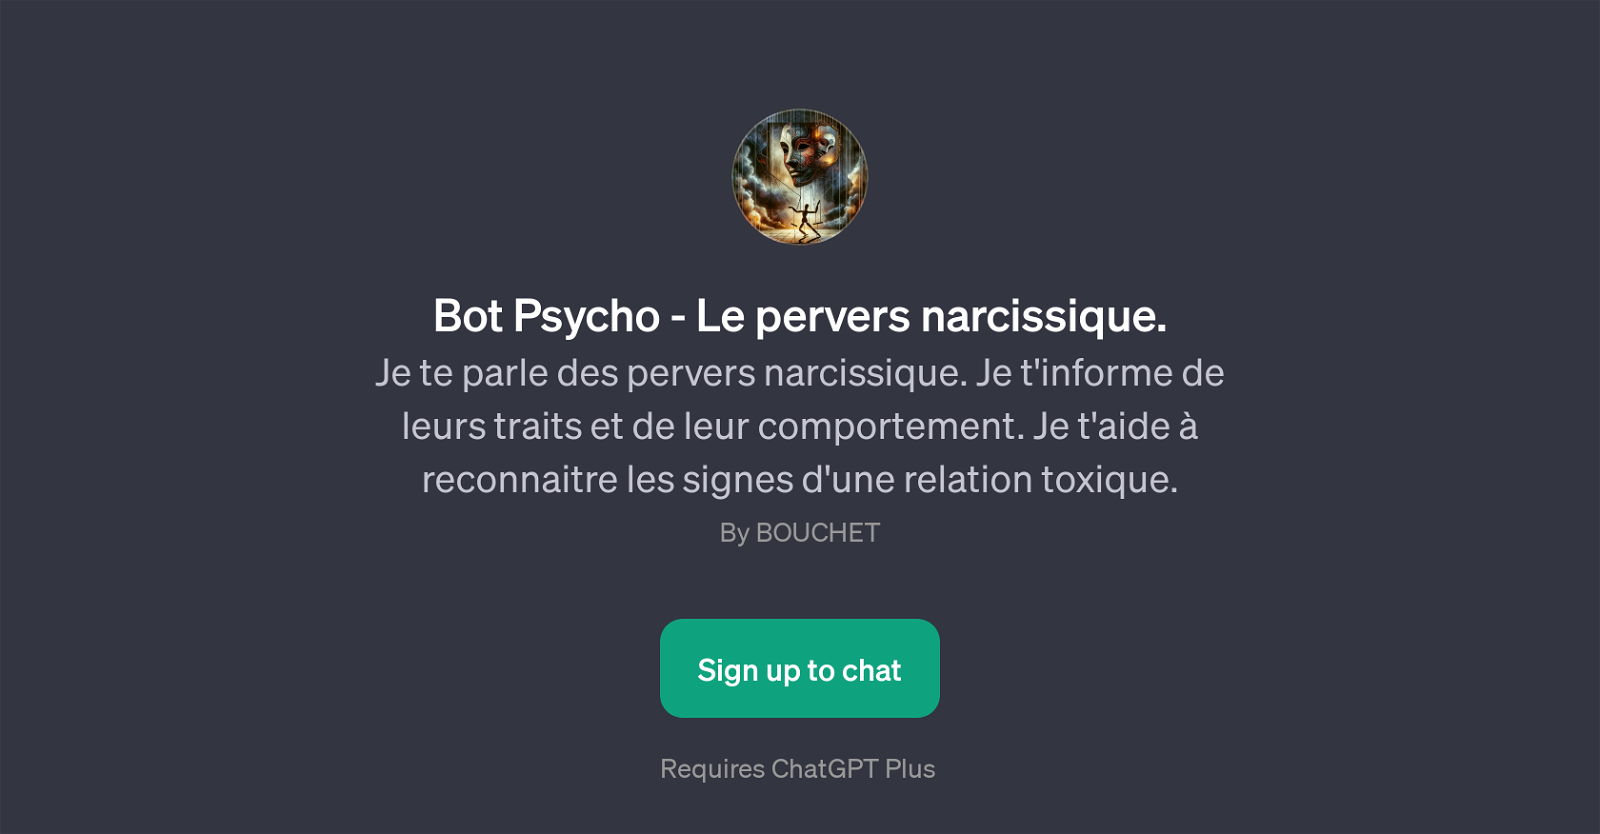 Bot Psycho - Le pervers narcissique website